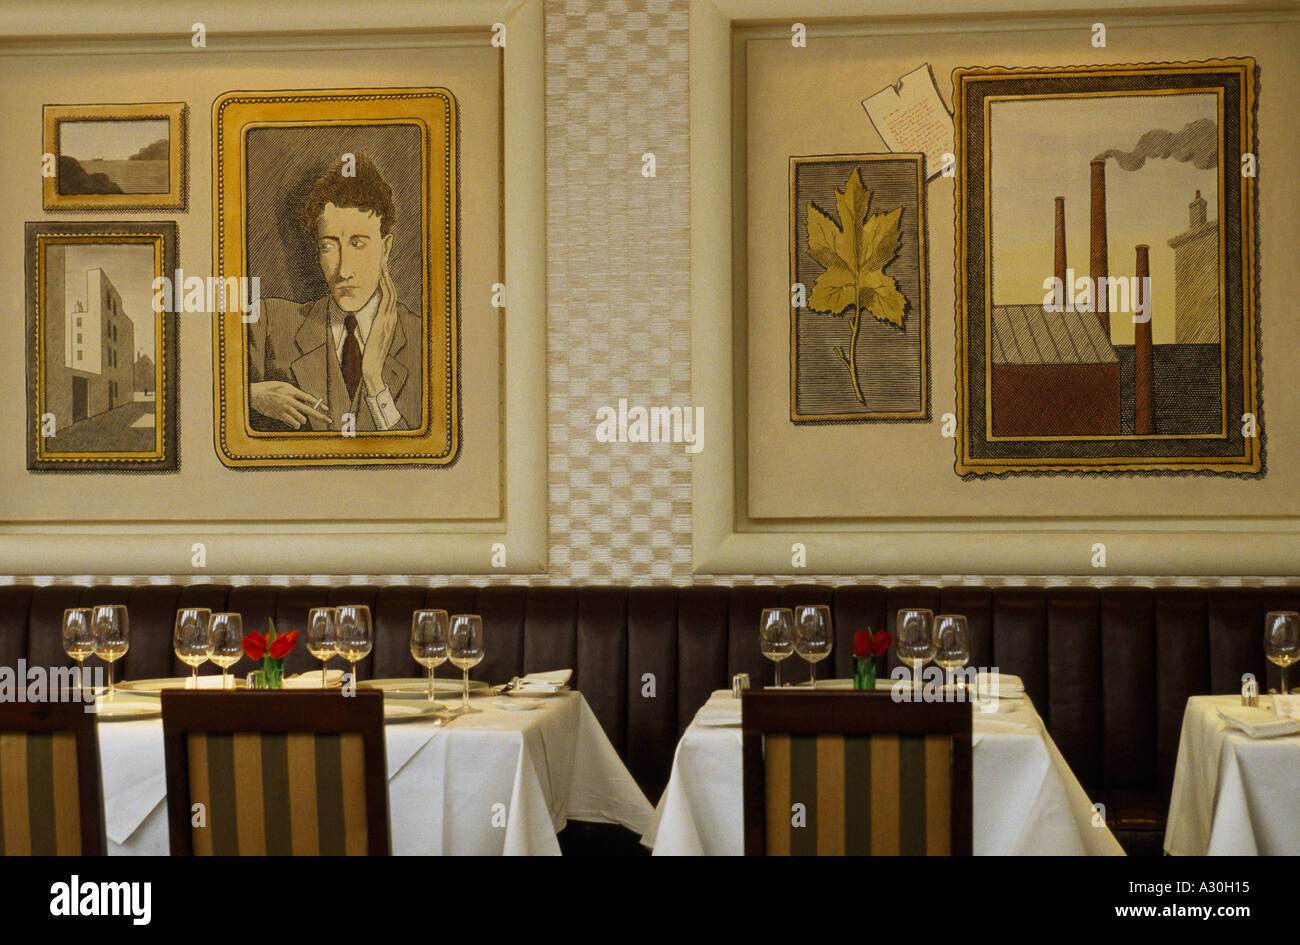 marco pierre white s mirabelle restaurant in mayfair Stock Photo